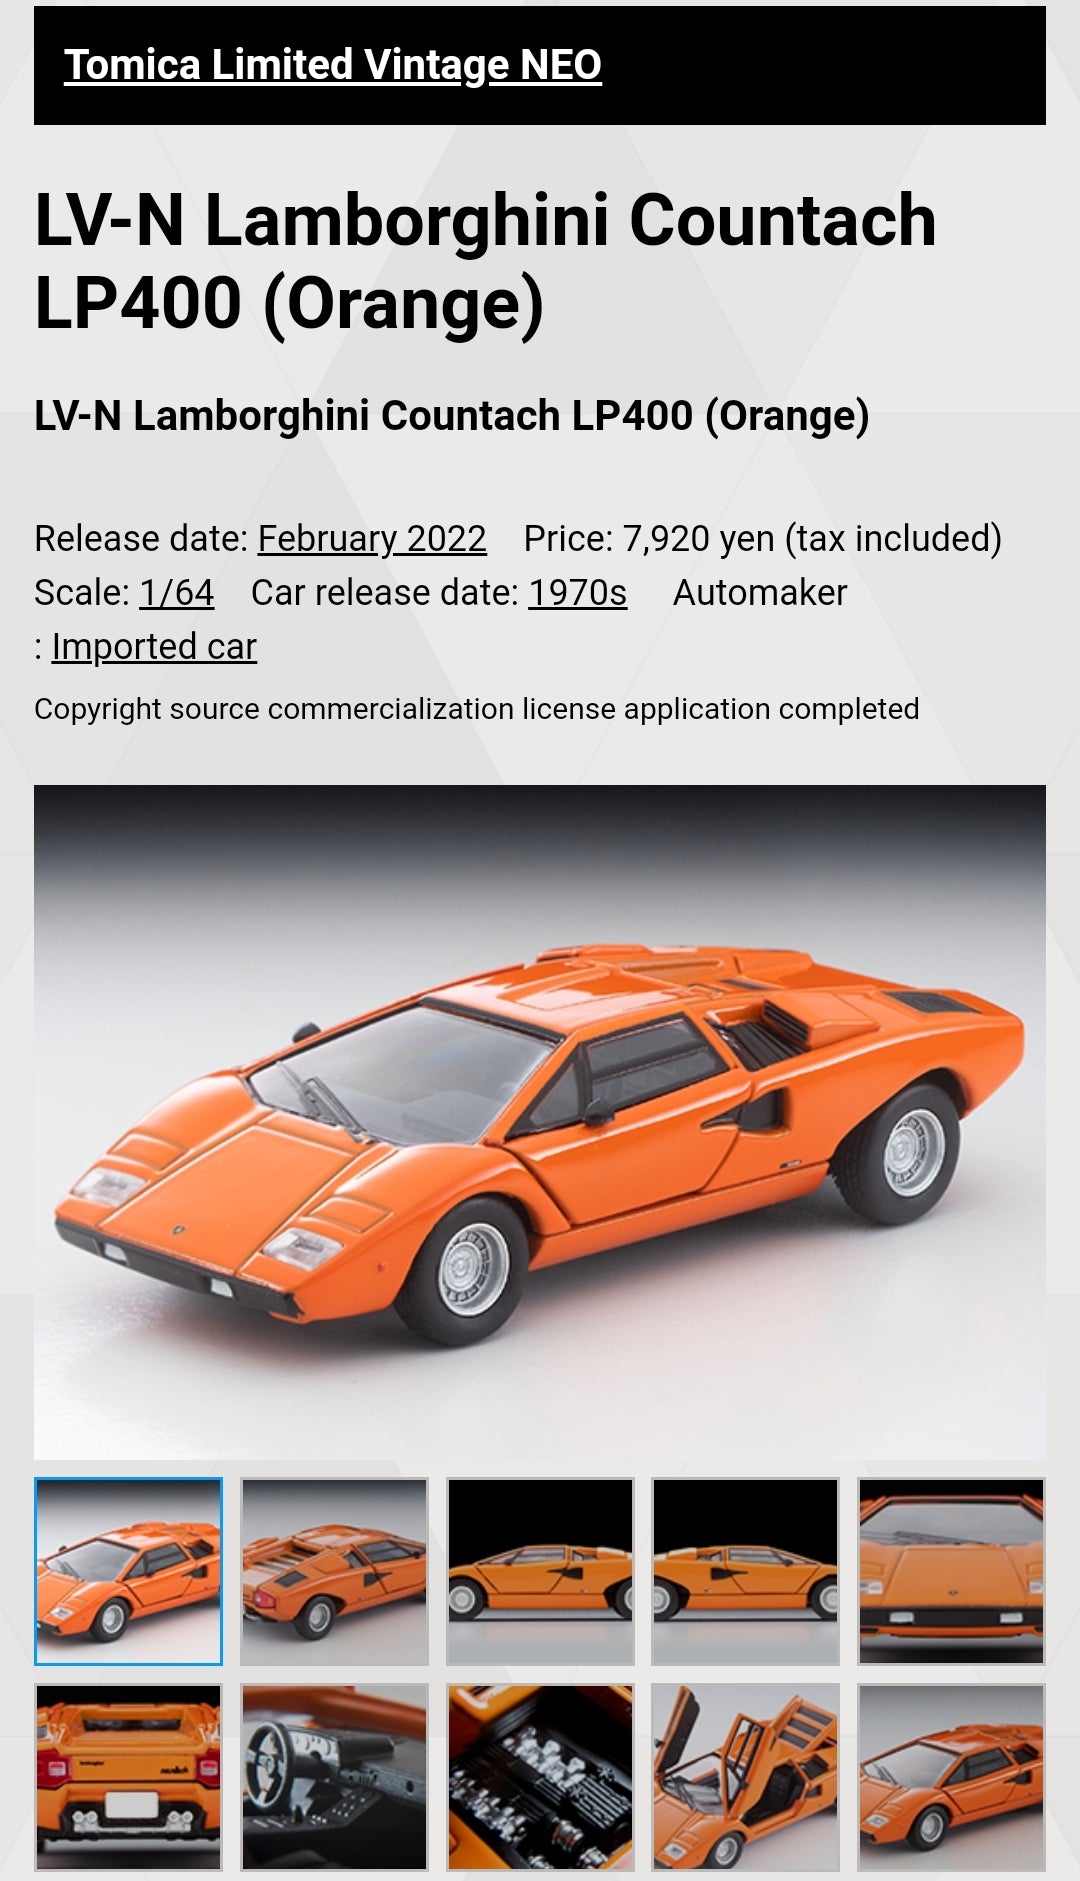 Tomica Limited Vintage Neo LV-N Lamborghini Countach LP400 (Orange)